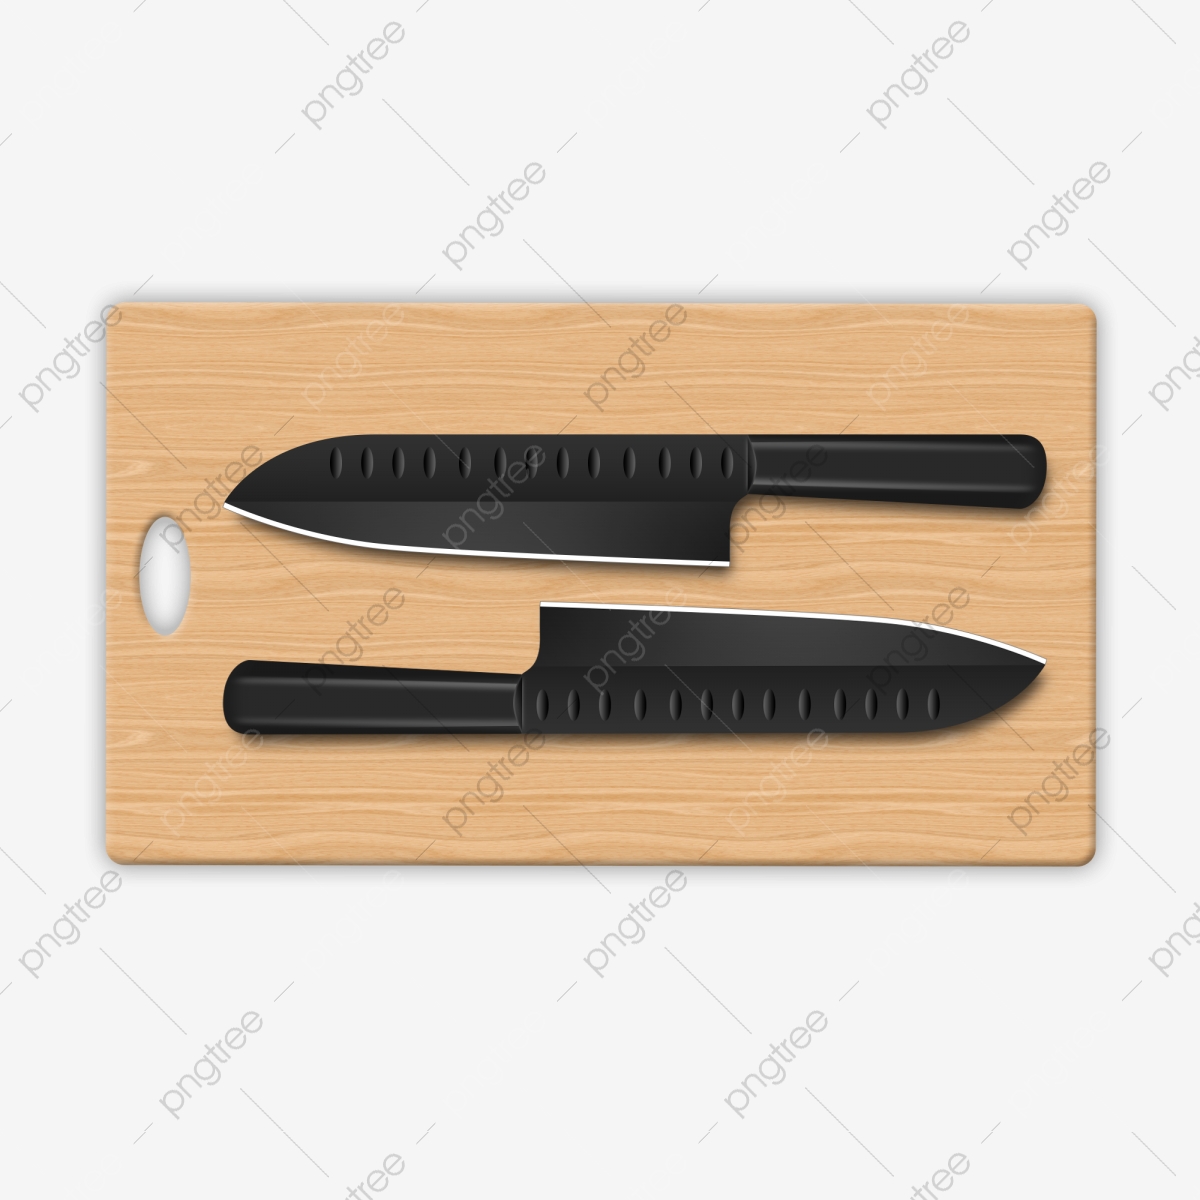 knife clipart cutting board